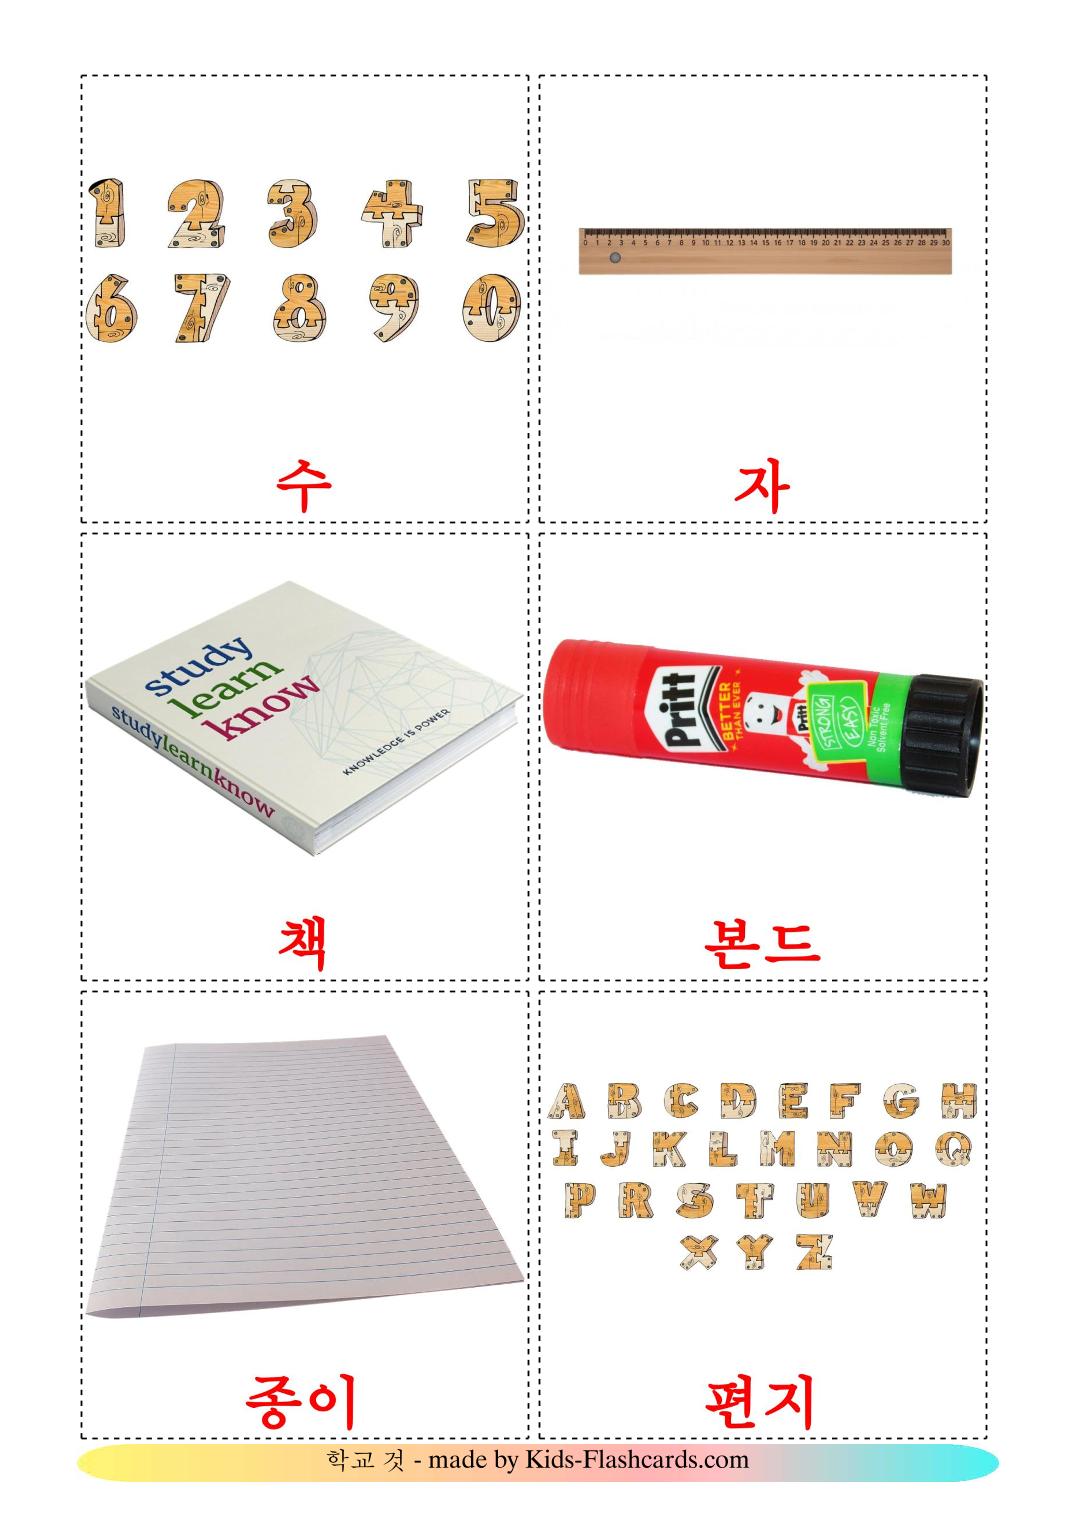 Objetos de clase - 36 fichas de coreano para imprimir gratis 